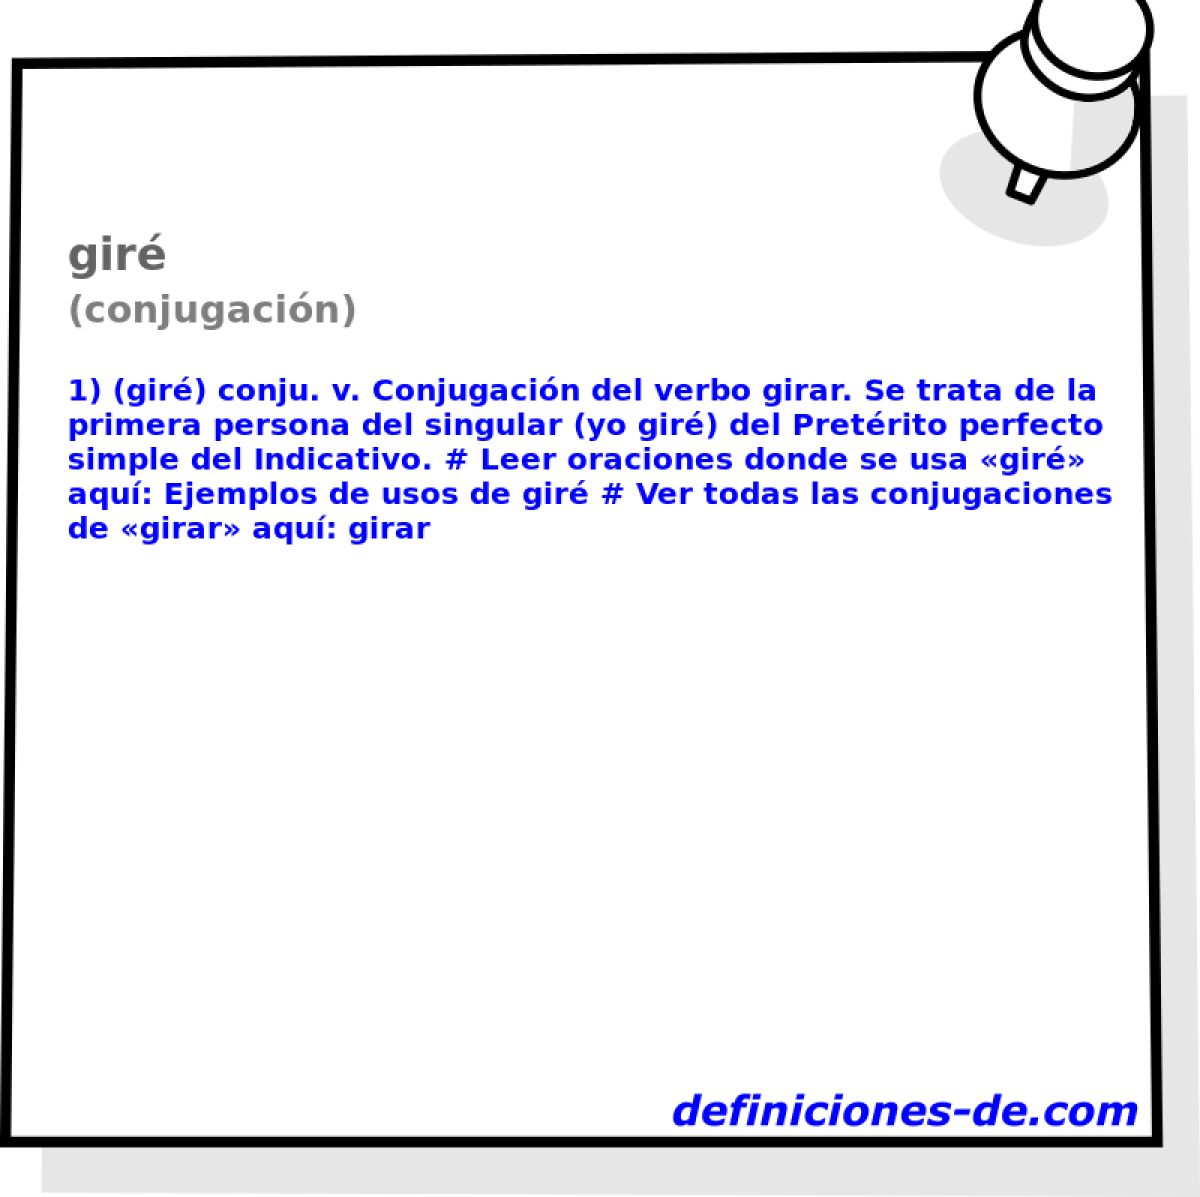 gir (conjugacin)